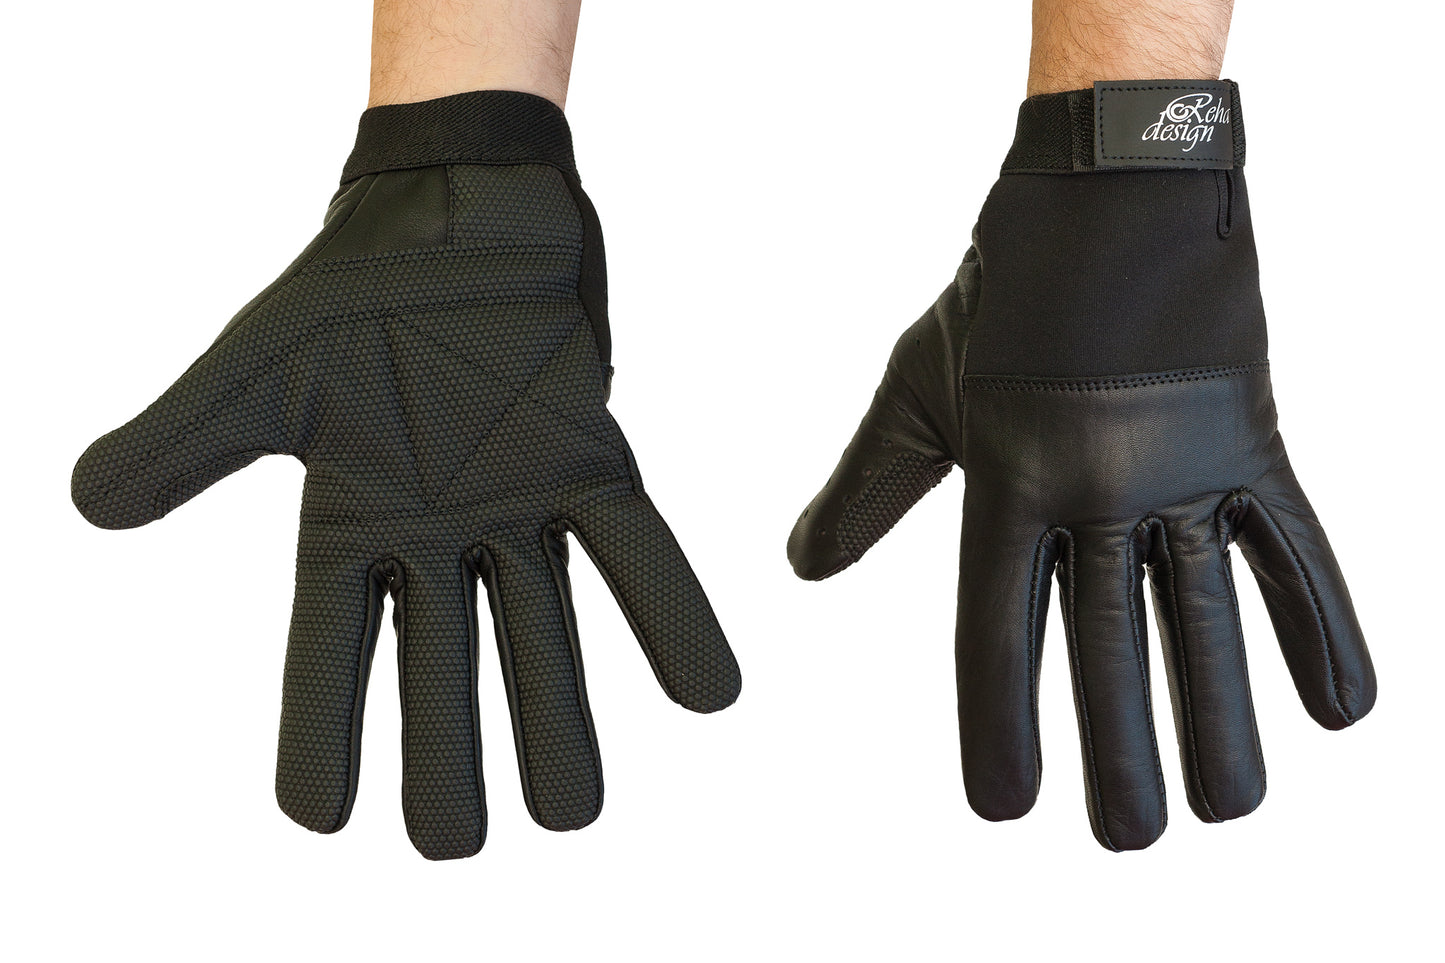 Rehadesign 4 Seasons Wheelchair Gloves